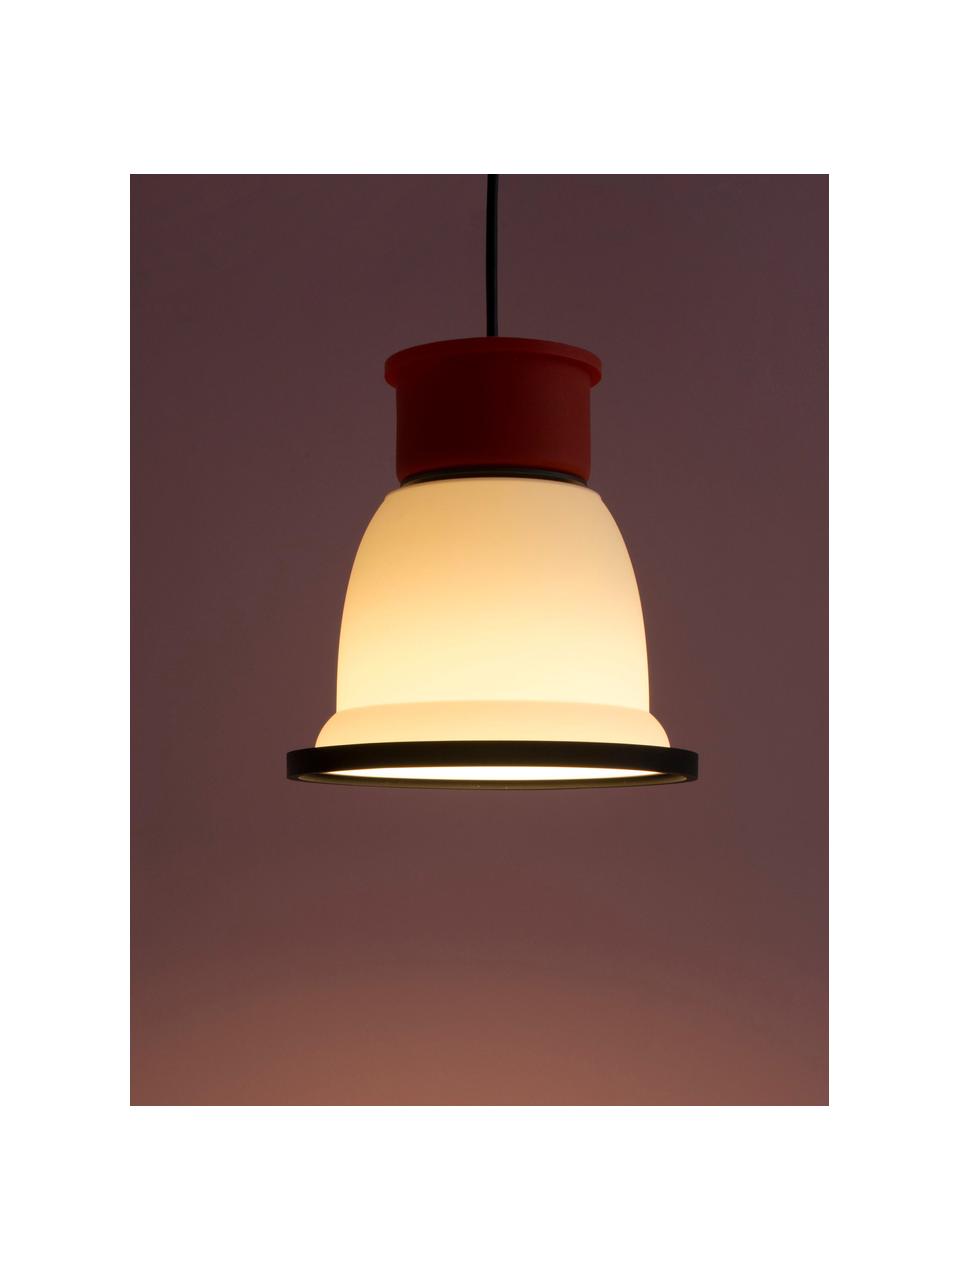 Kleine hanglamp CL1, Lampenkap: silicone, kunststof, Wit, rood, zwart, Ø 18 x H 18 cm